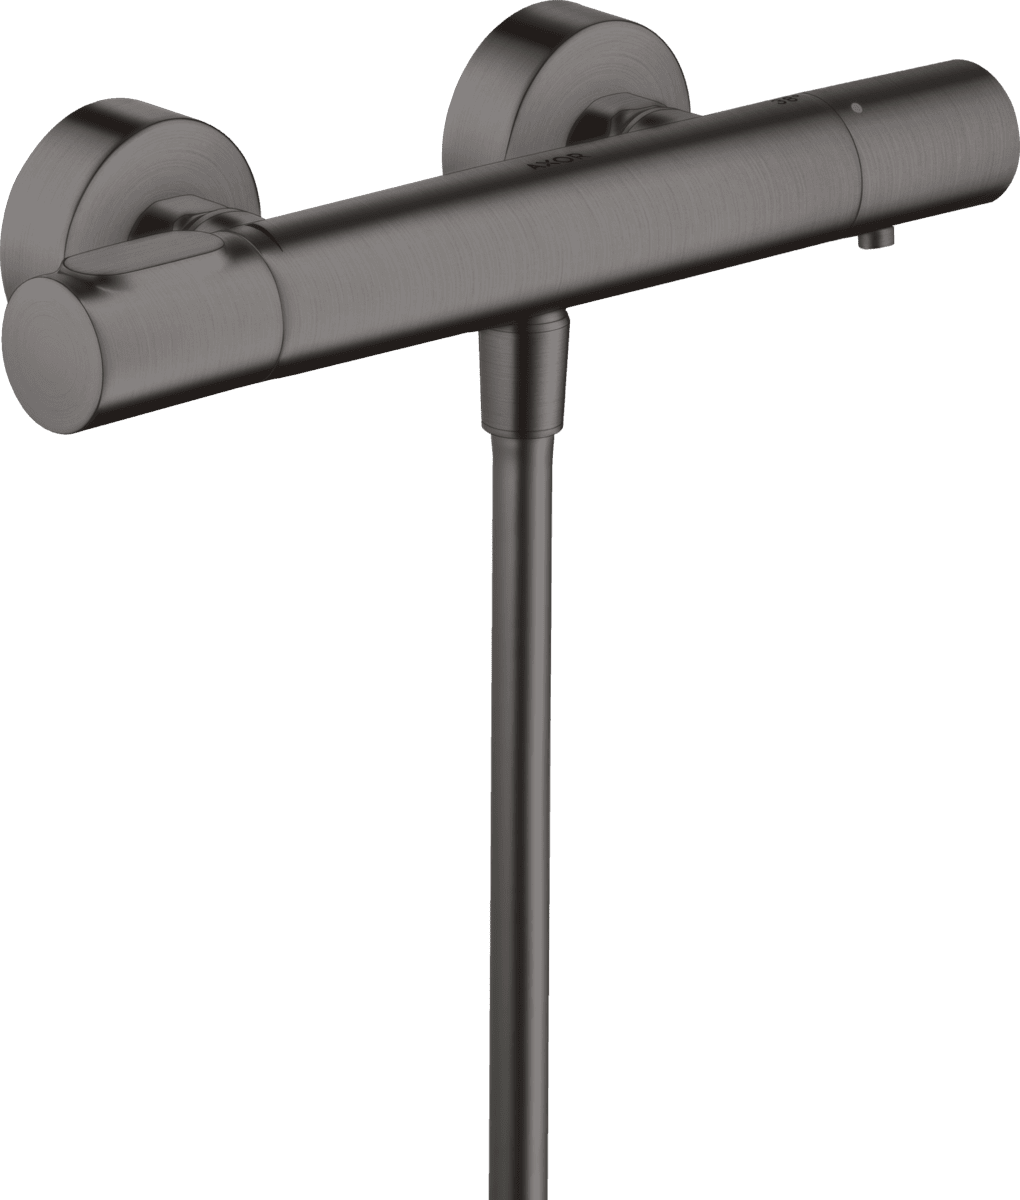 HANSGROHE AXOR Citterio M Termostatik duş bataryası aplike montaj #34635340 - Mat Siyah Krom resmi